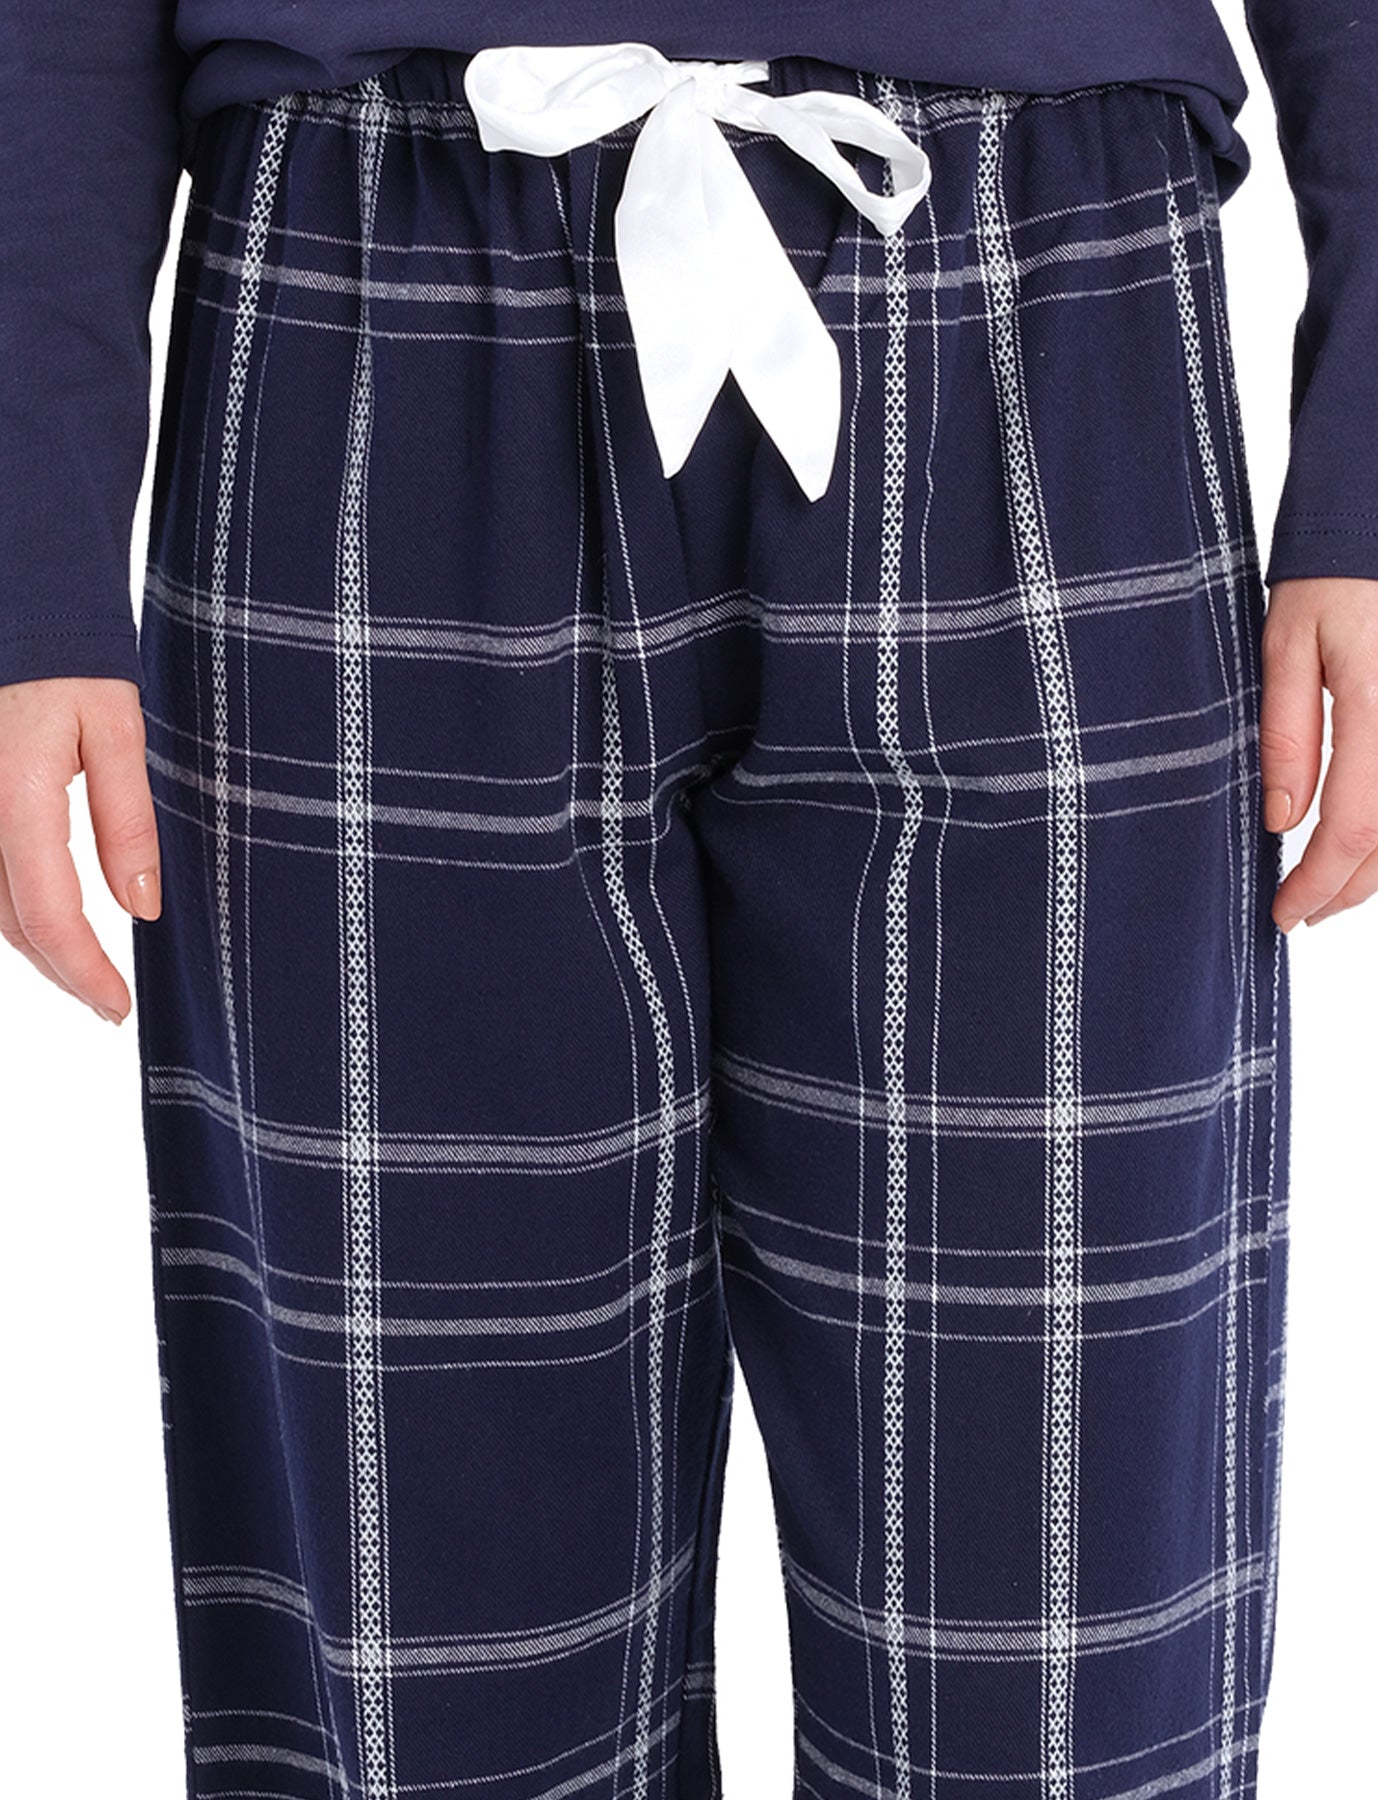 Evening Check Flannelette Cotton Pyjama Pants | womens winter pyjama pants | Magnolia Lounge Australia